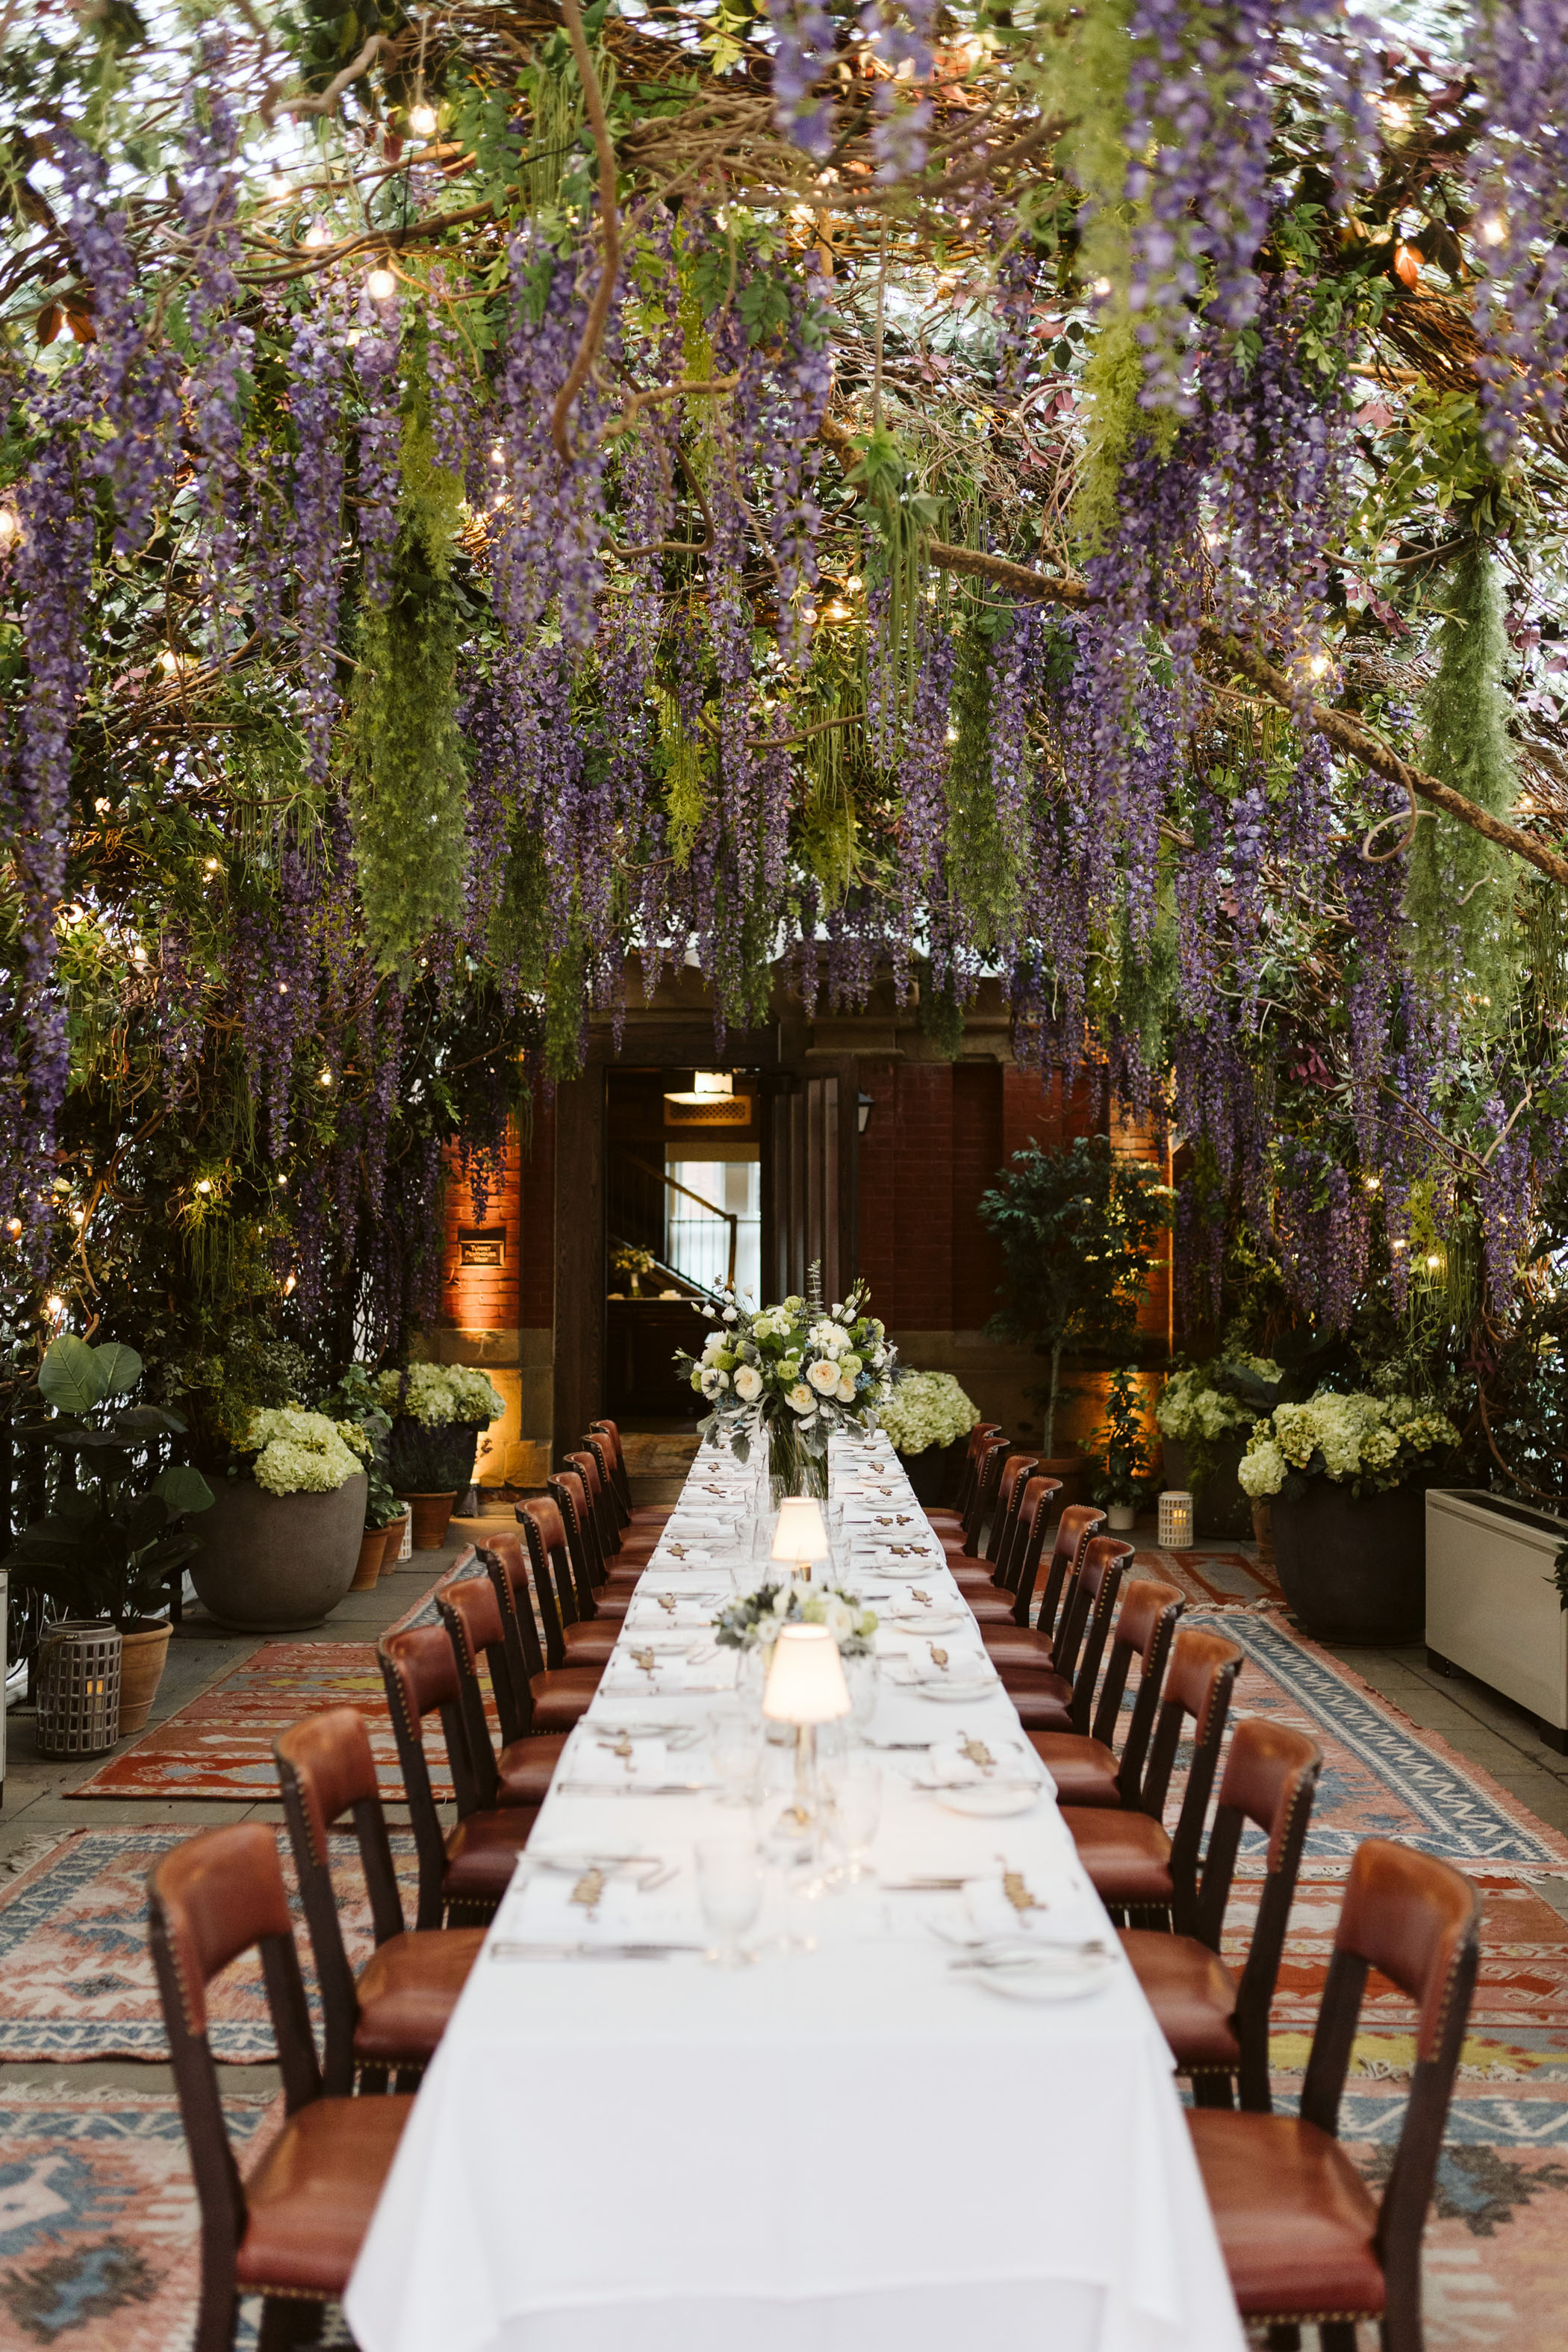 Indoor wedding reception with purple wisteria